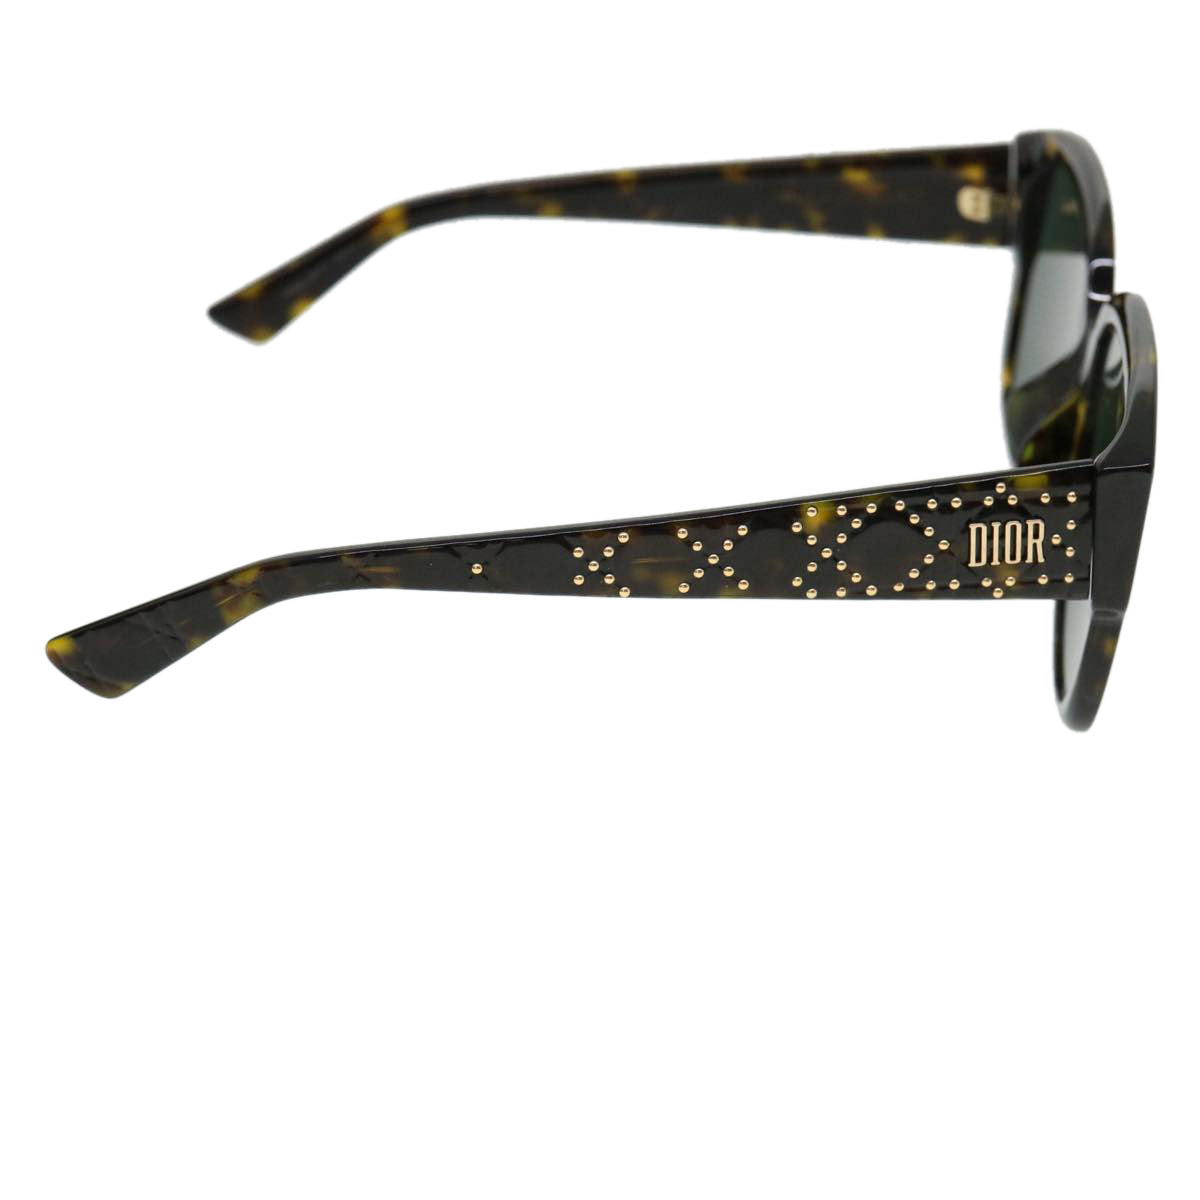 Christian Dior Sunglasses Platstick Black Auth 35584